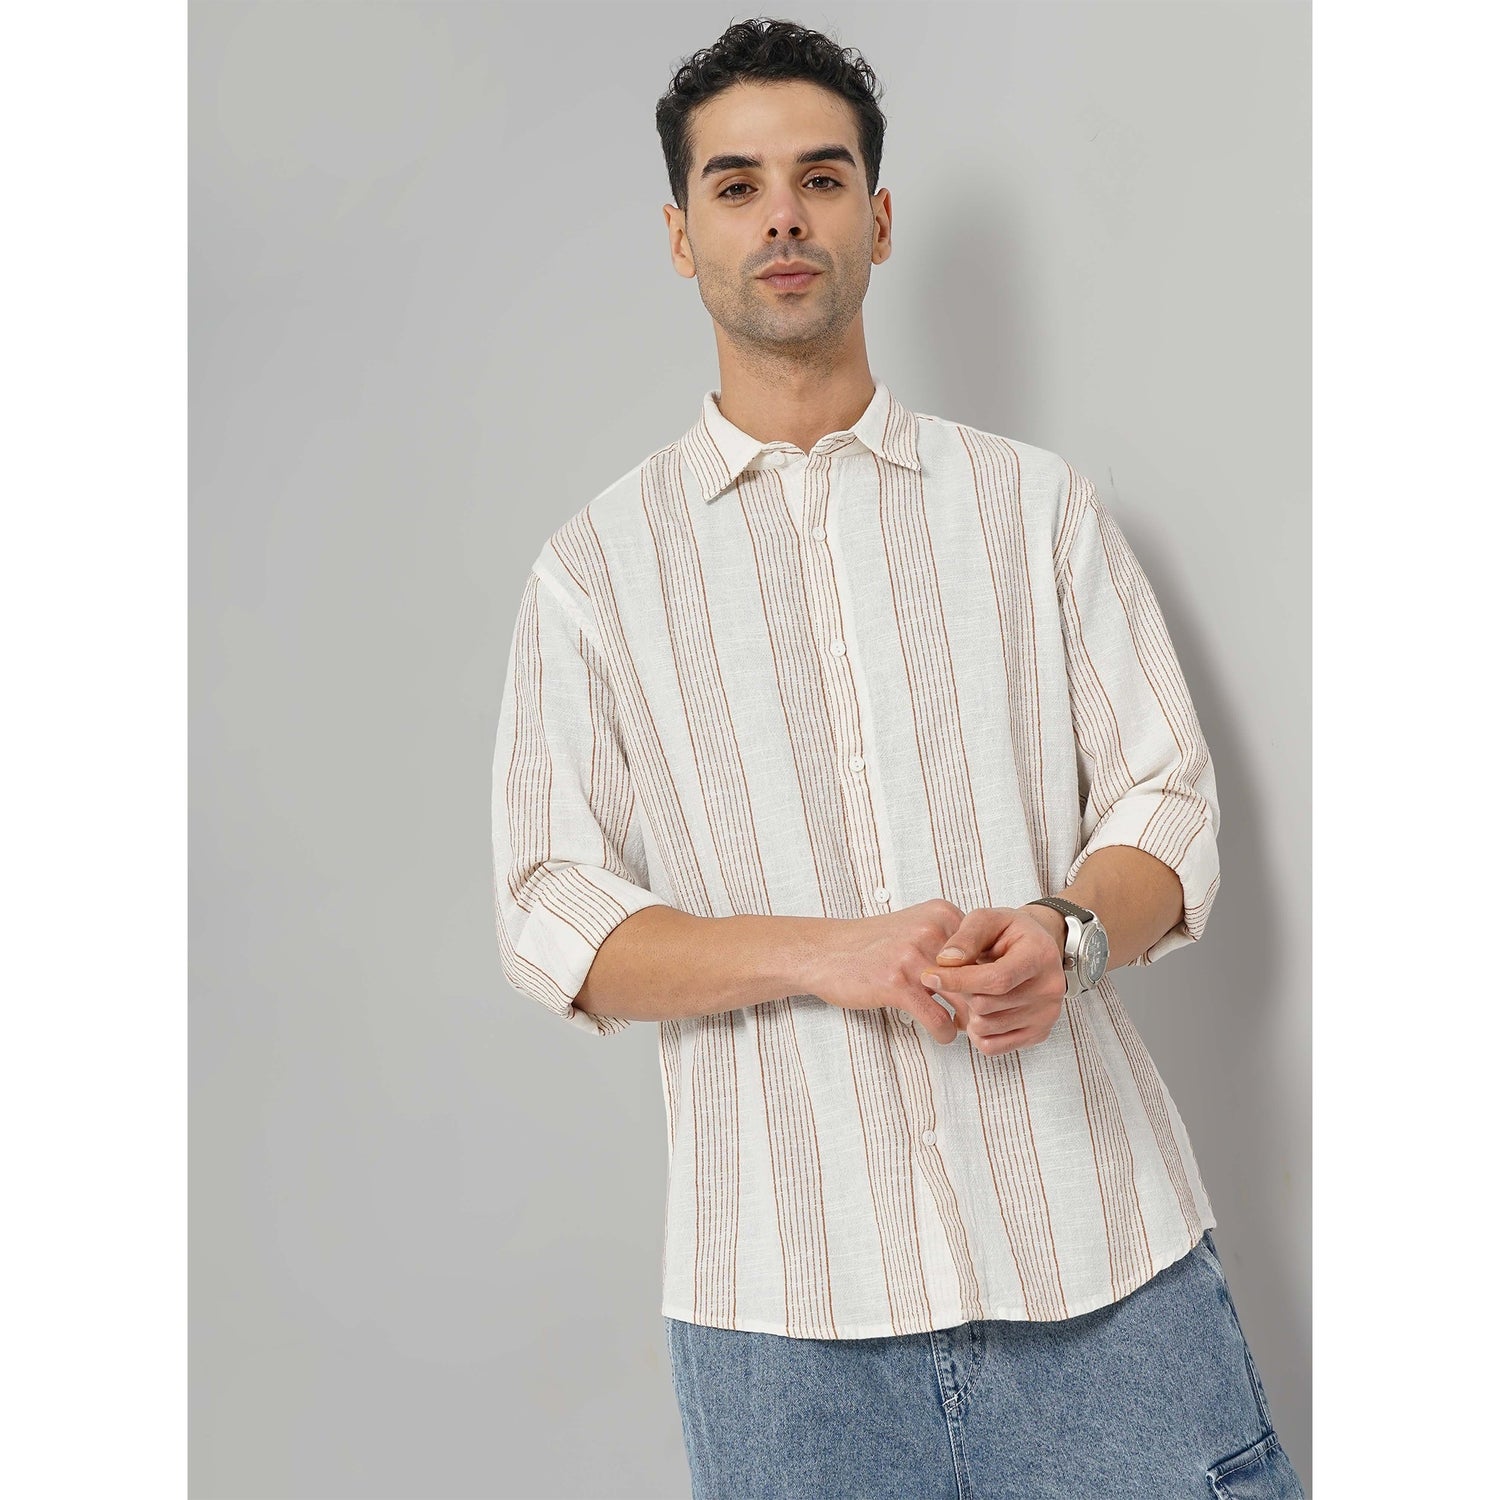 Men's Brown Striped Slim Fit Cotton Casual Shirt (GALESTRIP)